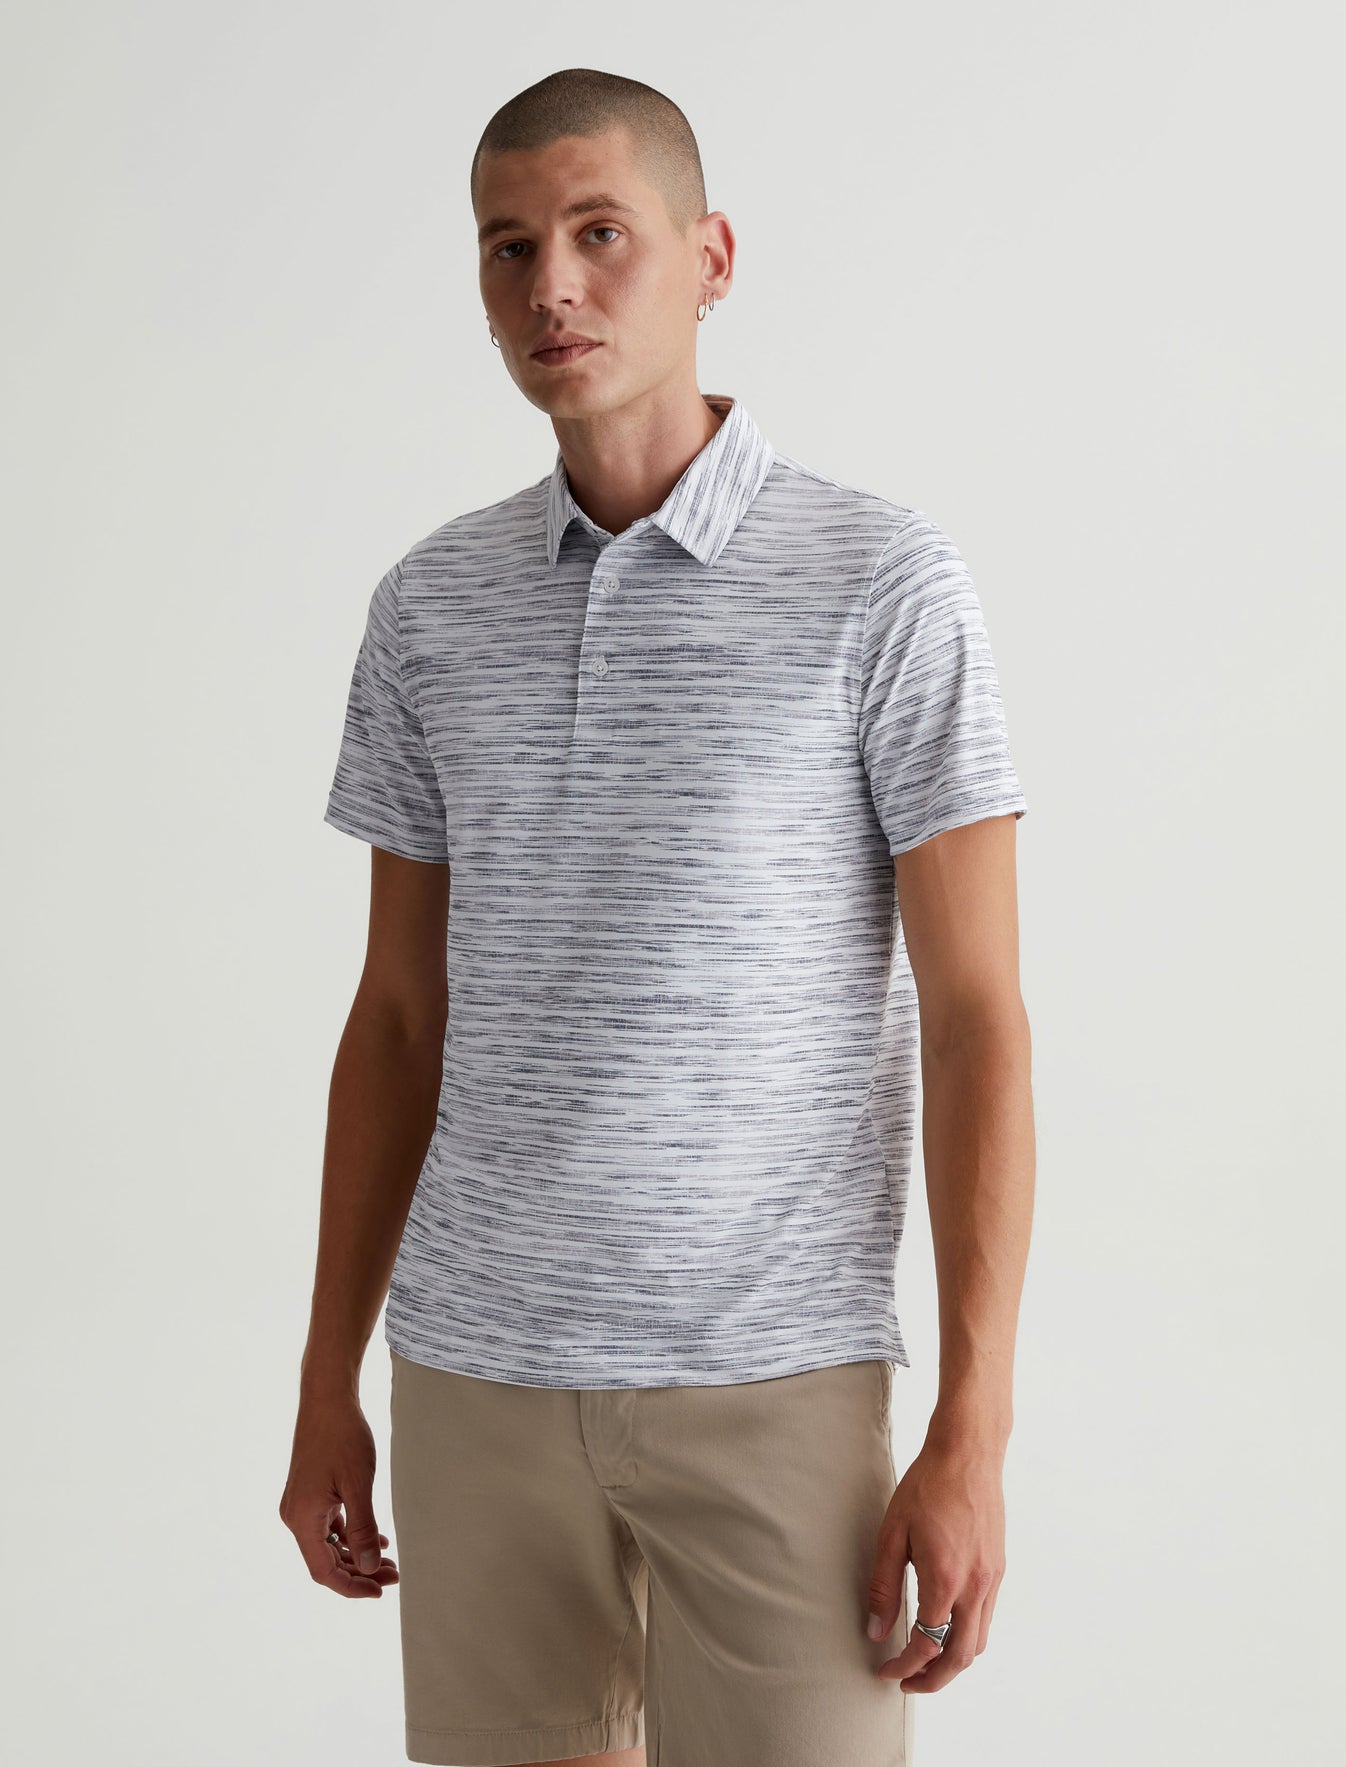 Bryce S/S Polo Slub Stripe Light Grey Classic Fit Short Sleeve Polo T-Shirt Mens Top Photo 1